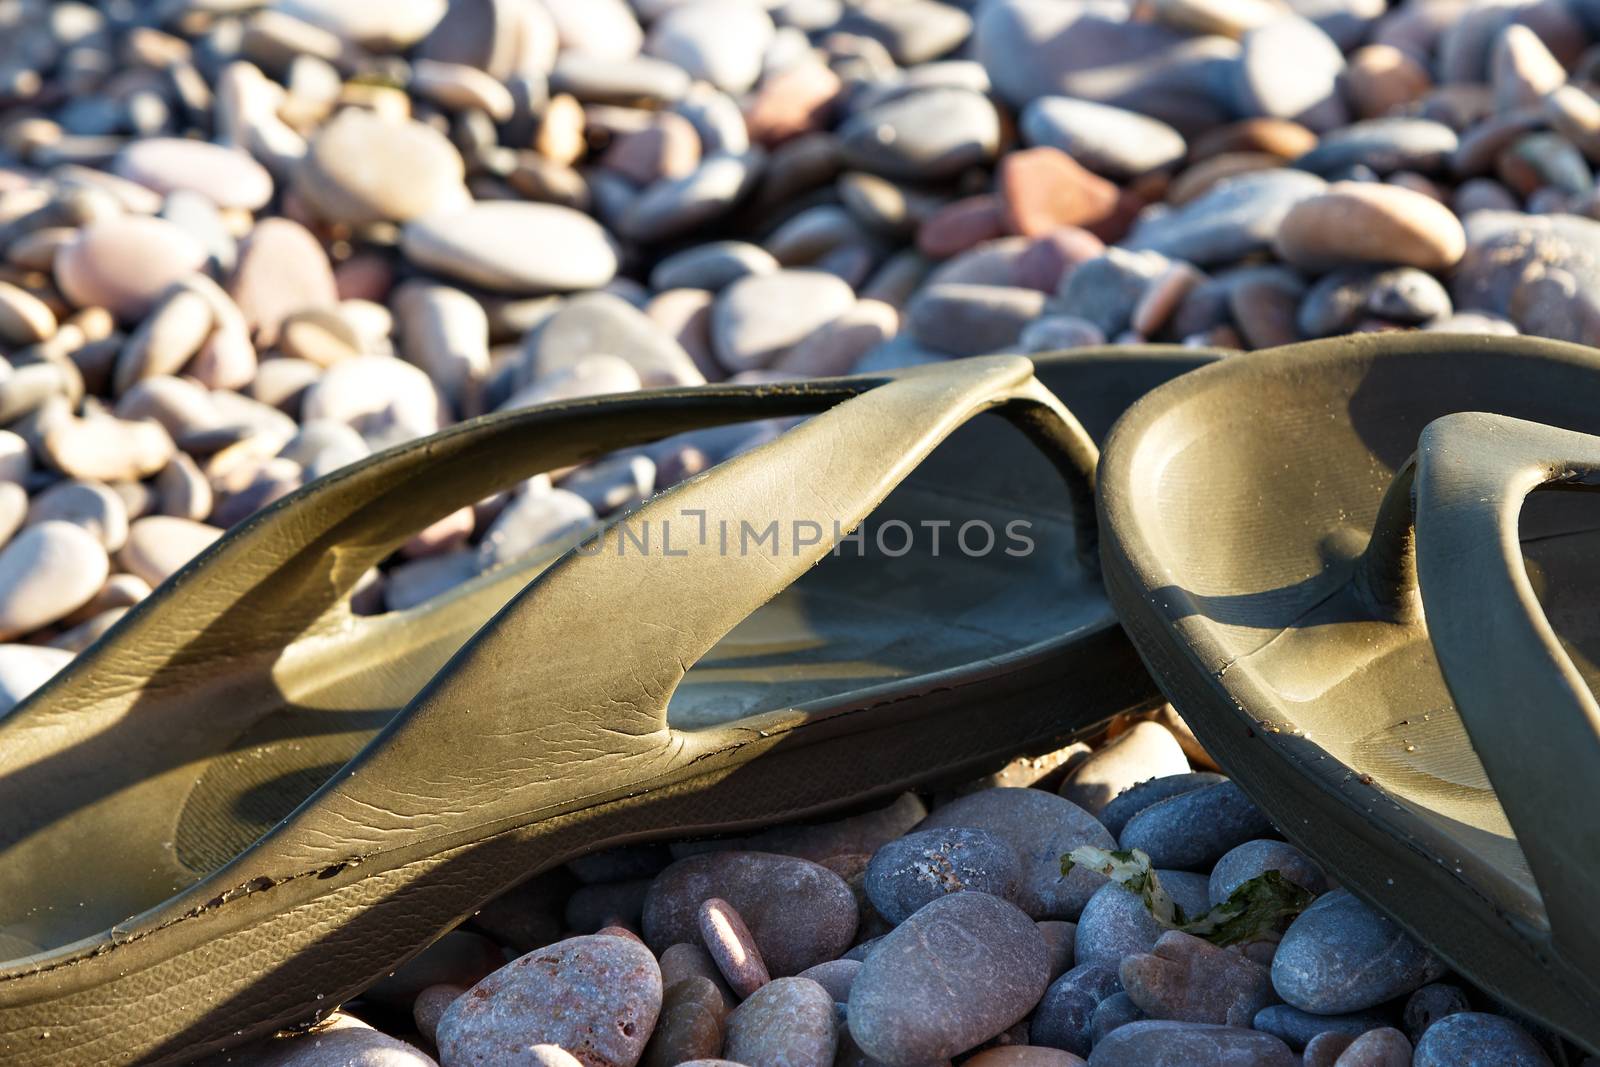 Green Flip Flops on a stones beach. Horizontal image.